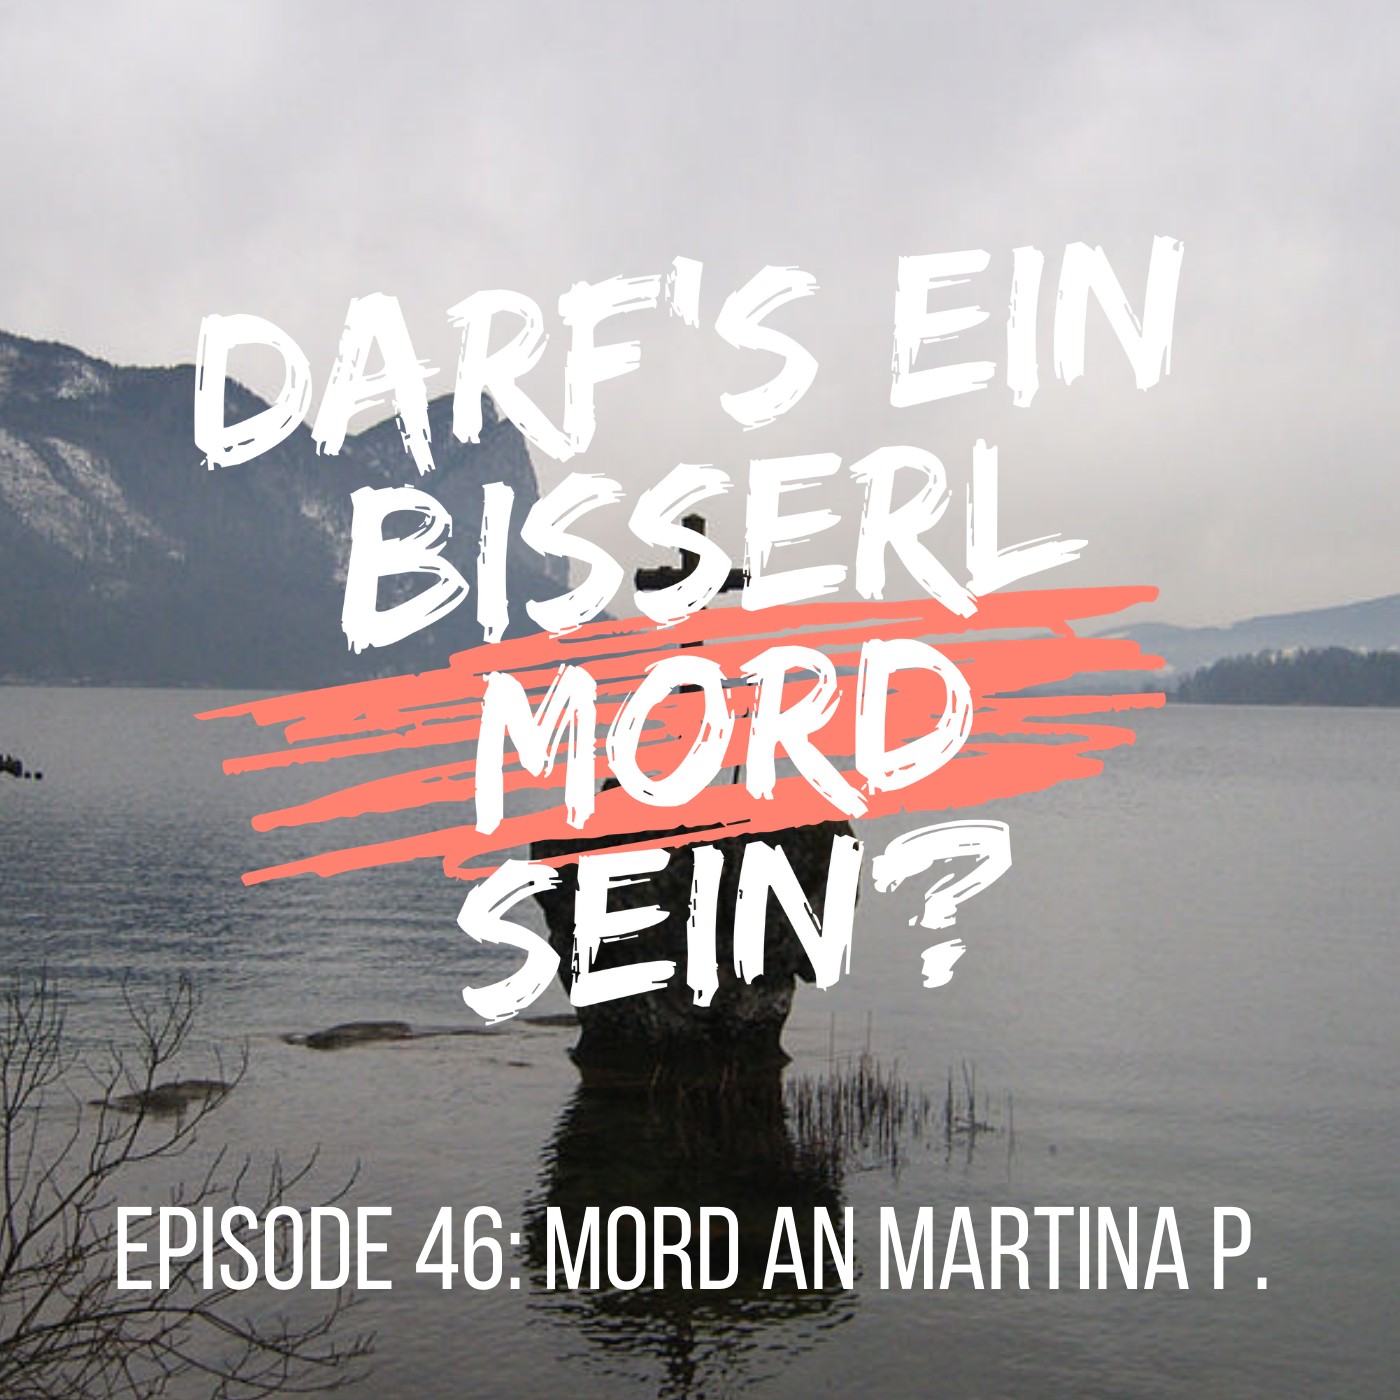 Episode 46: Mord an Martina P. - UNGELÖST